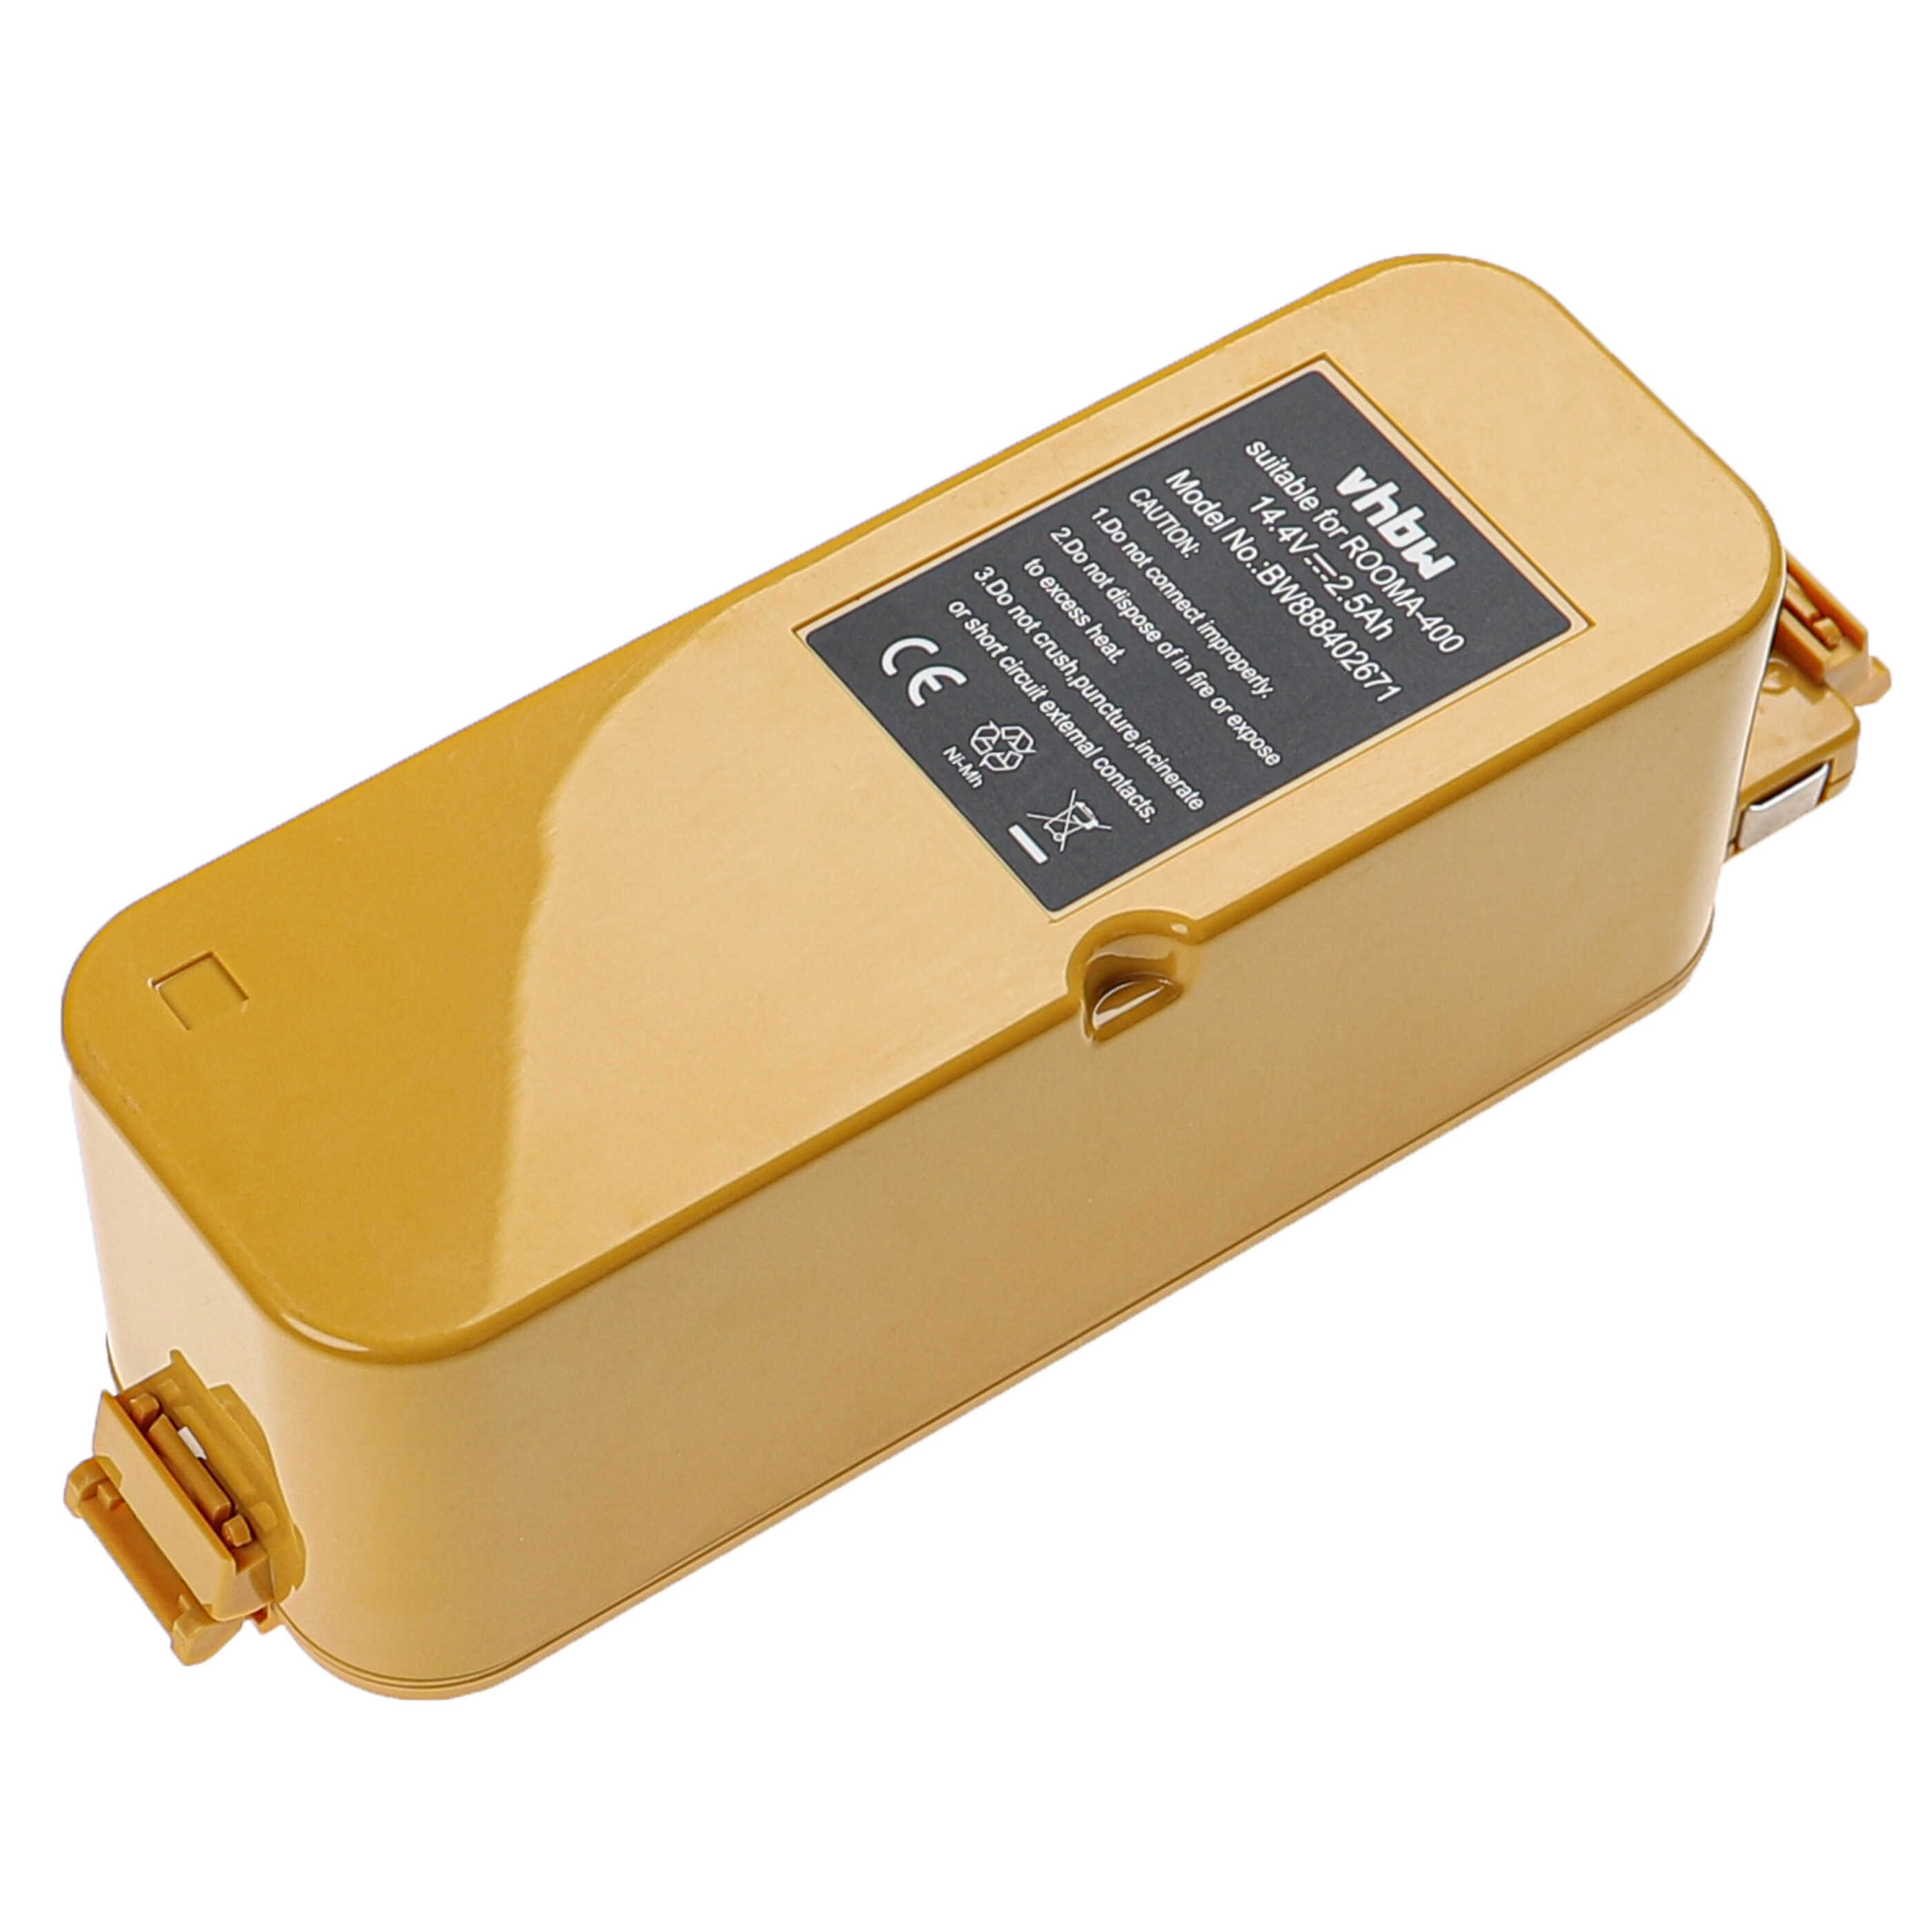 Akumulator do robota zamiennik 17373, APS 4905, NC-3493-919, 11700 - 2500 mAh 14,4 V NiMH, żółty